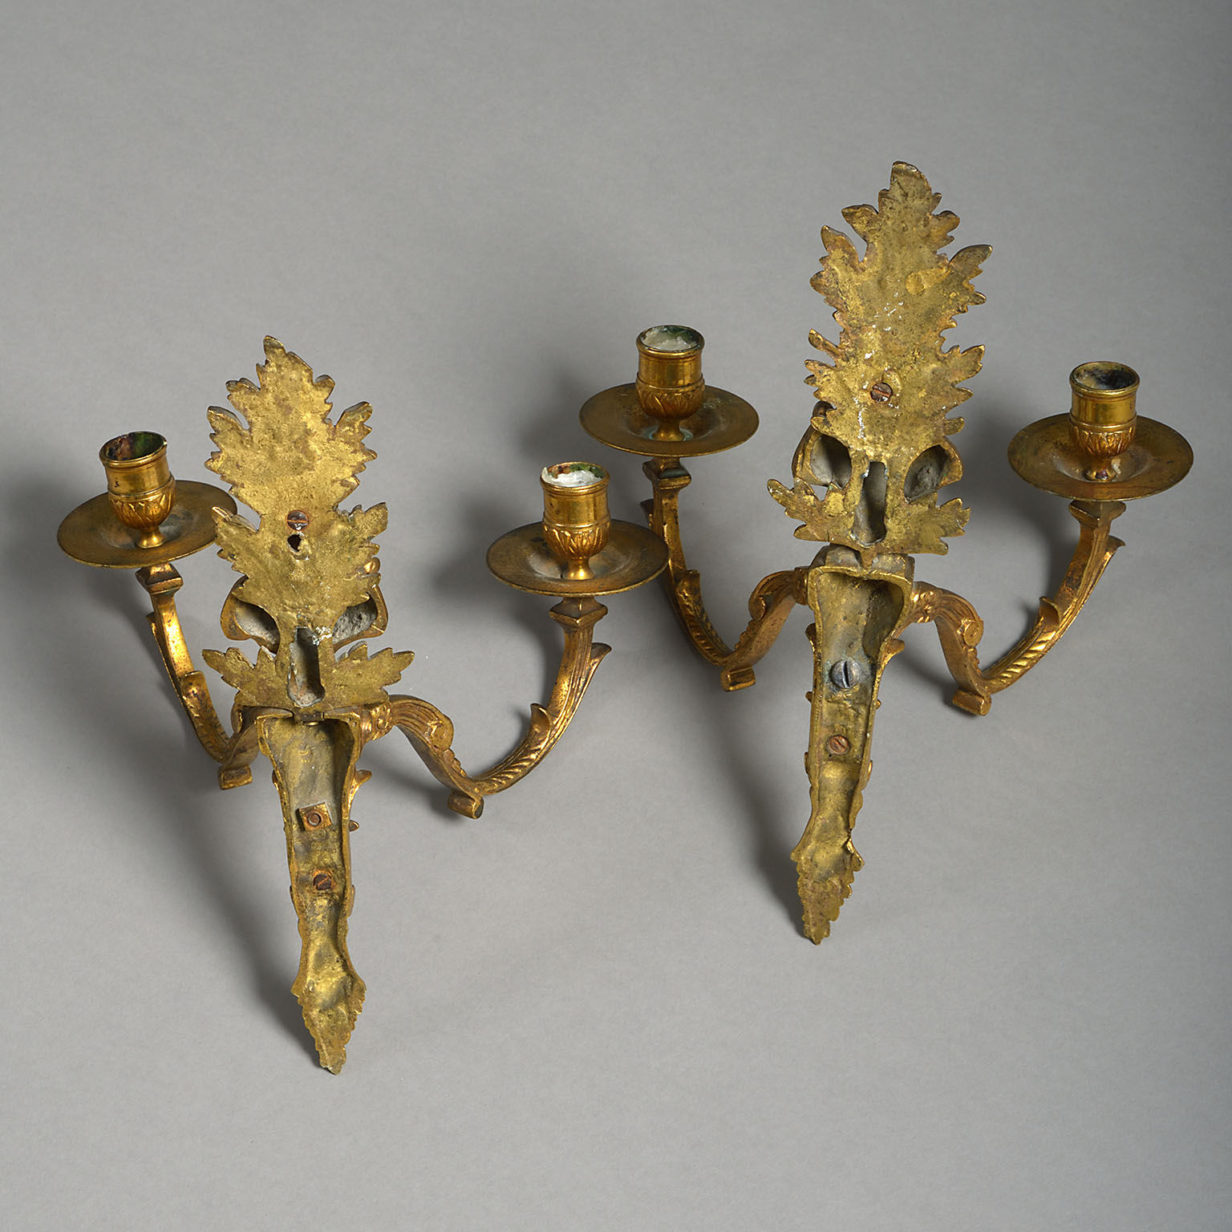 Early 18th century louis xiv gilt-brass wall-lights